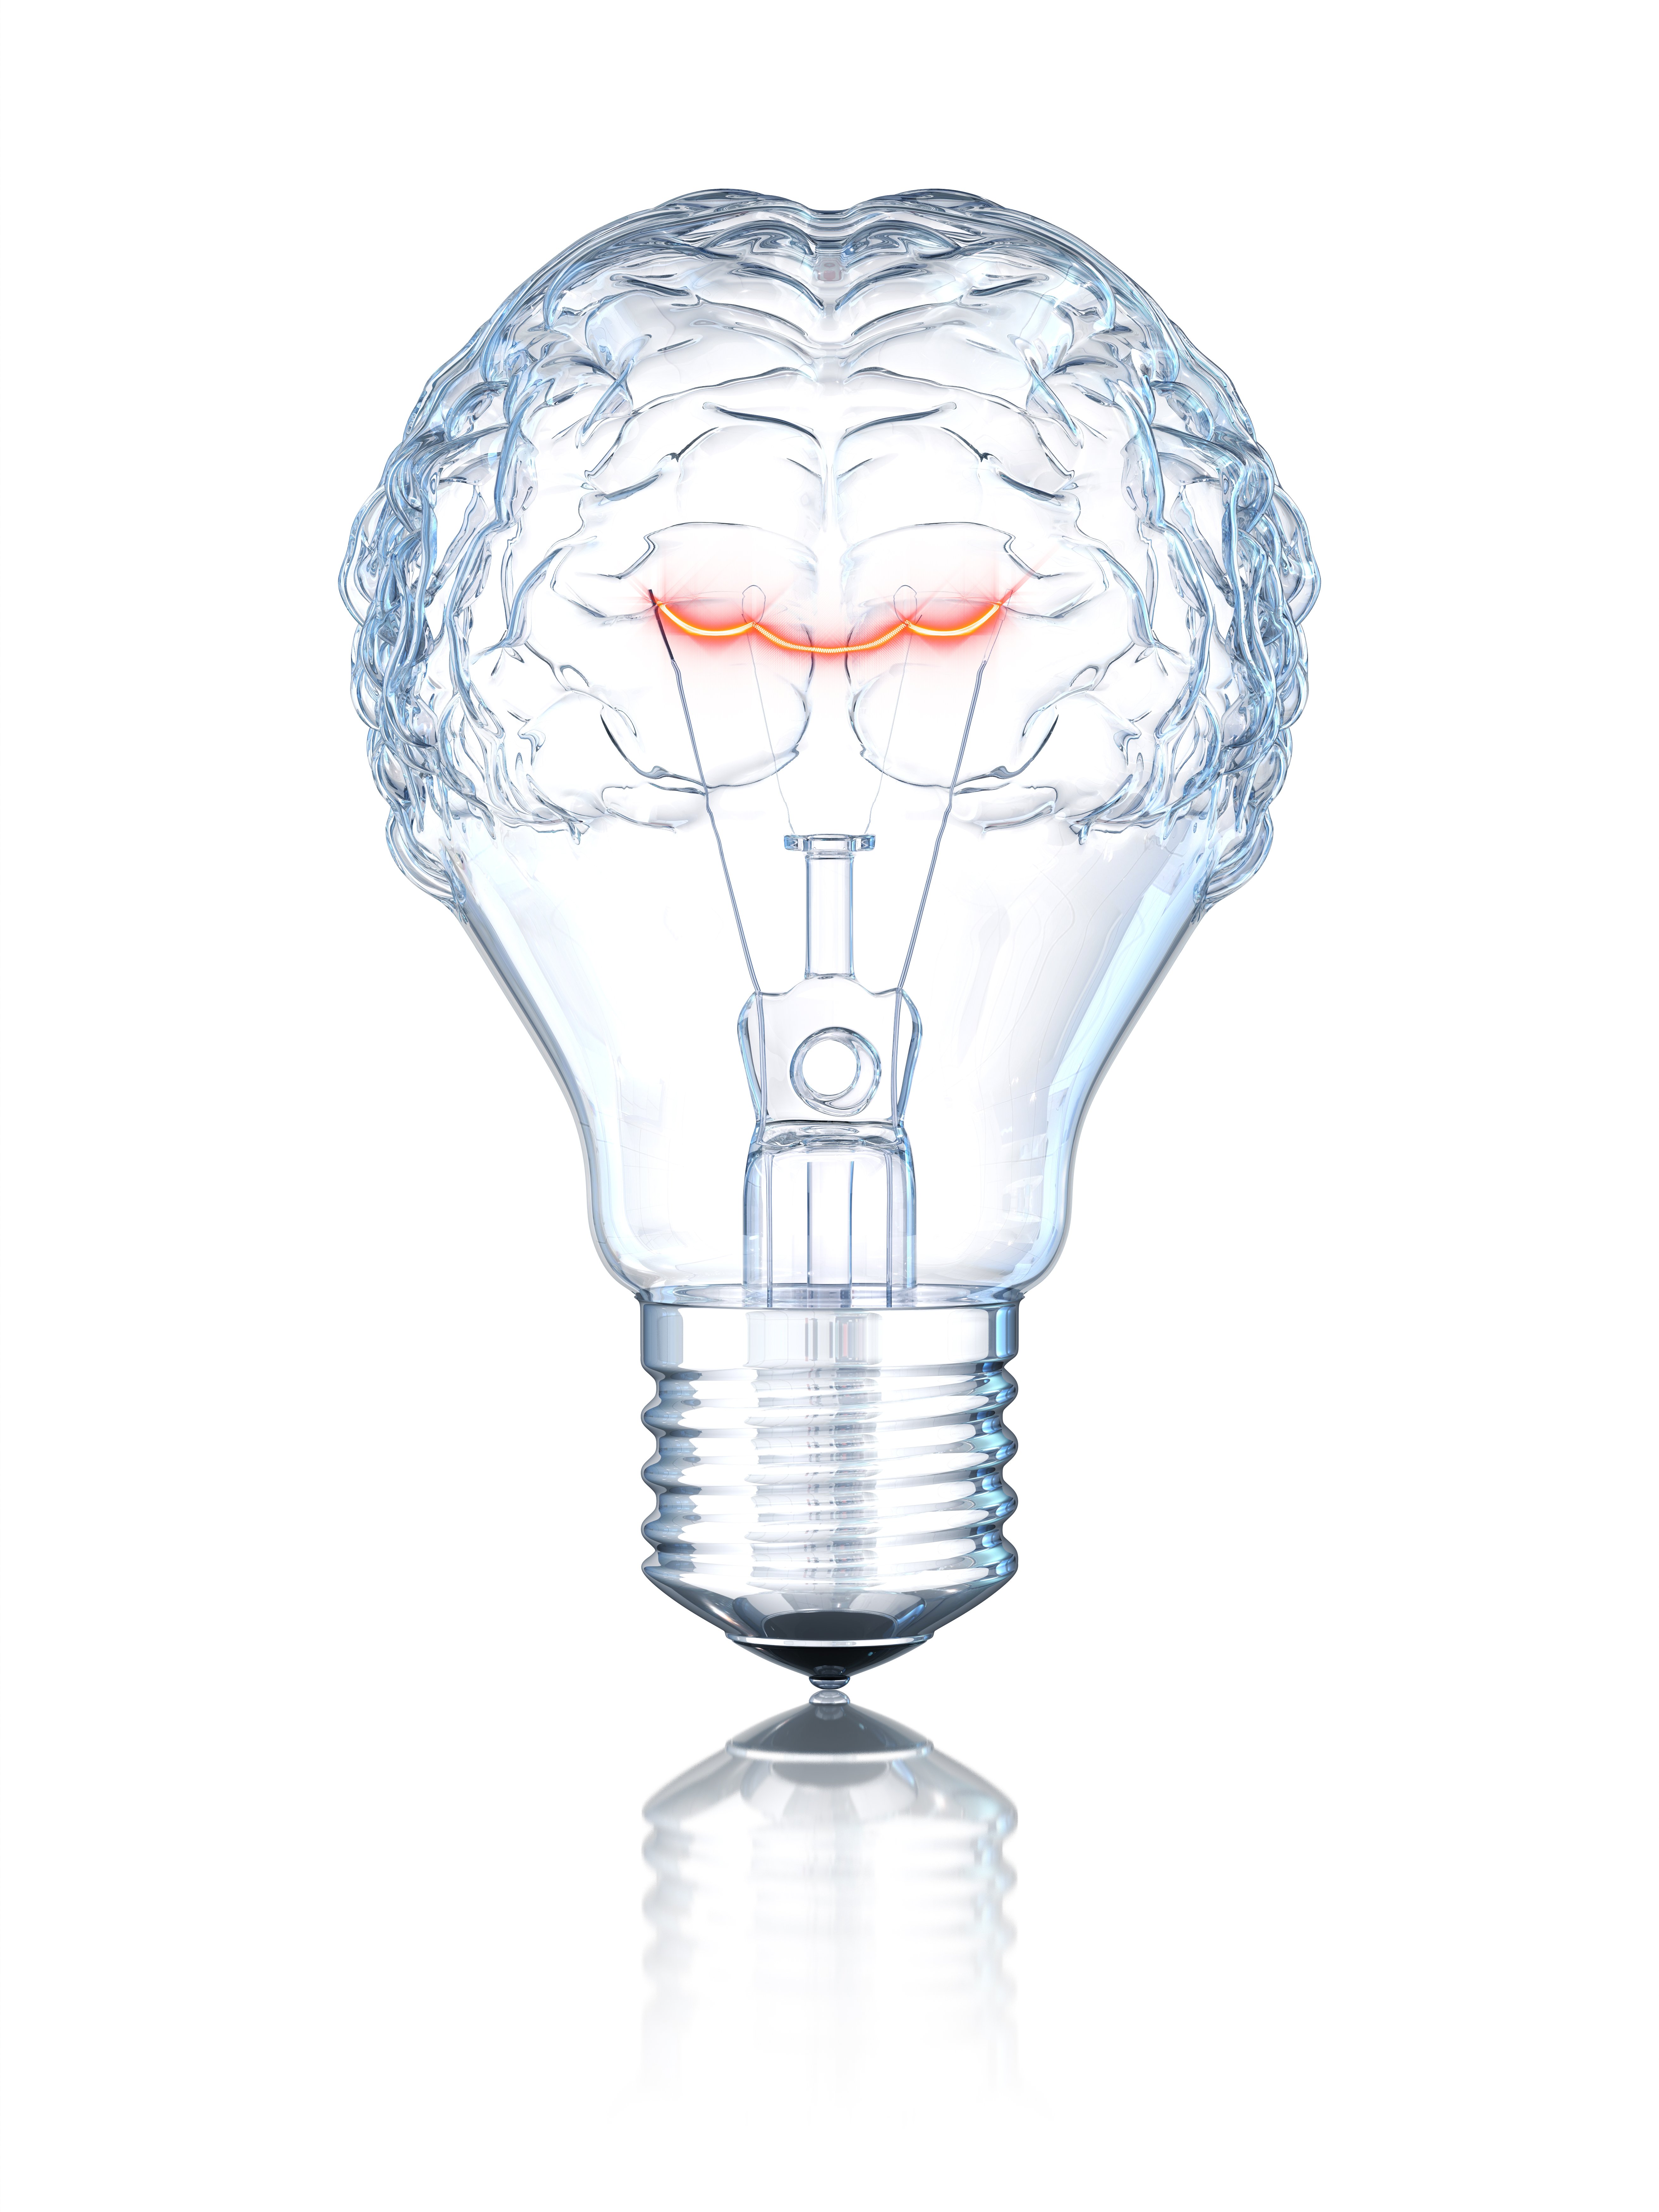 lightbulb with brain inside it